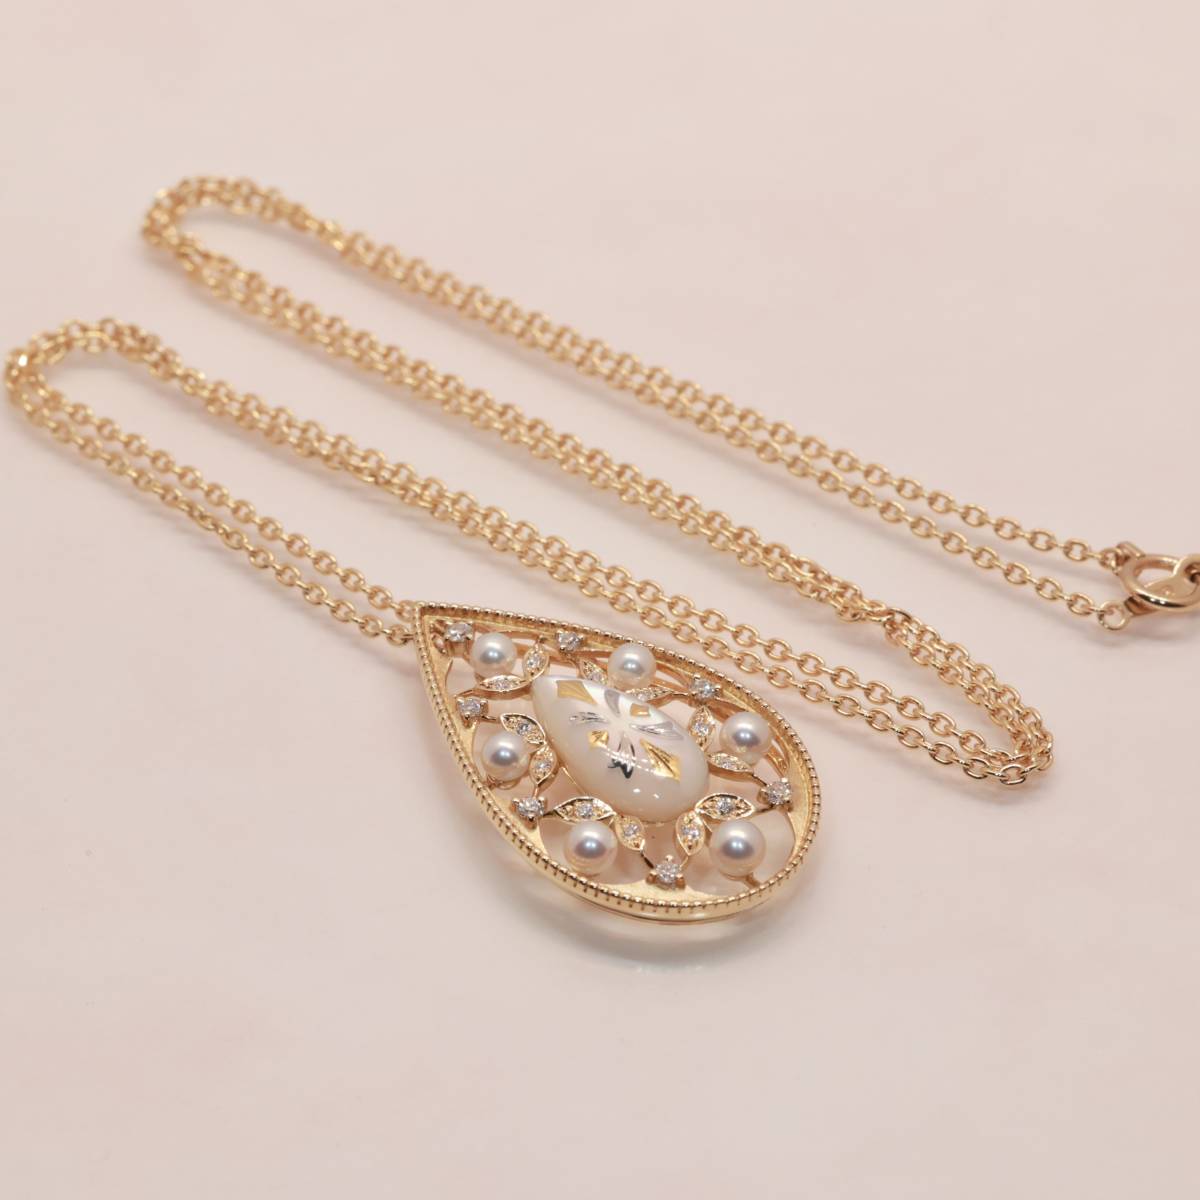 K18 Mikimoto pikwePique diamond baby pearl .. shell necklace pendant long necklace MIKIMOTO